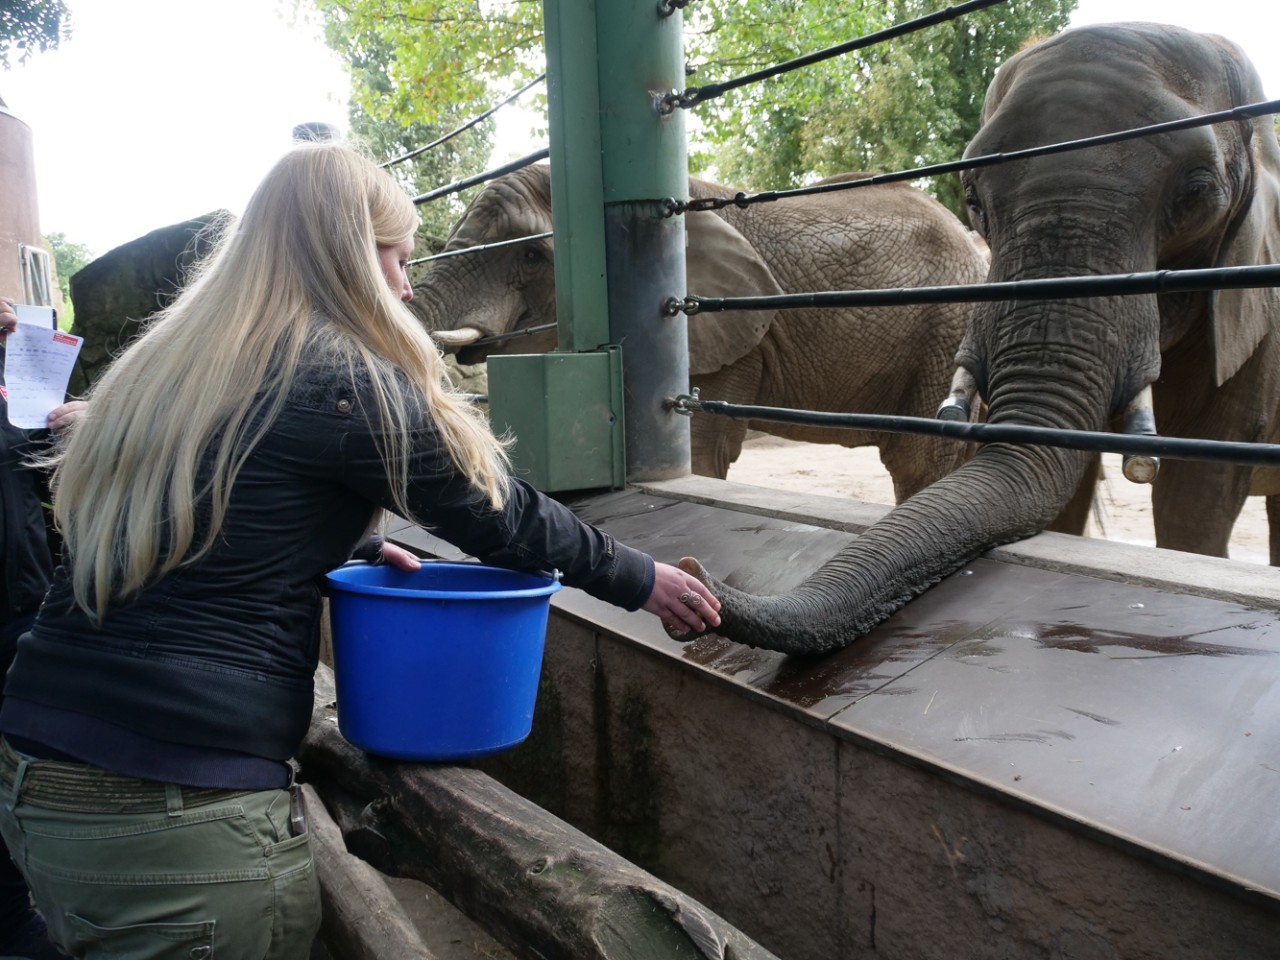 Lea fütterte im Duisburger Zoo die Elefanten.